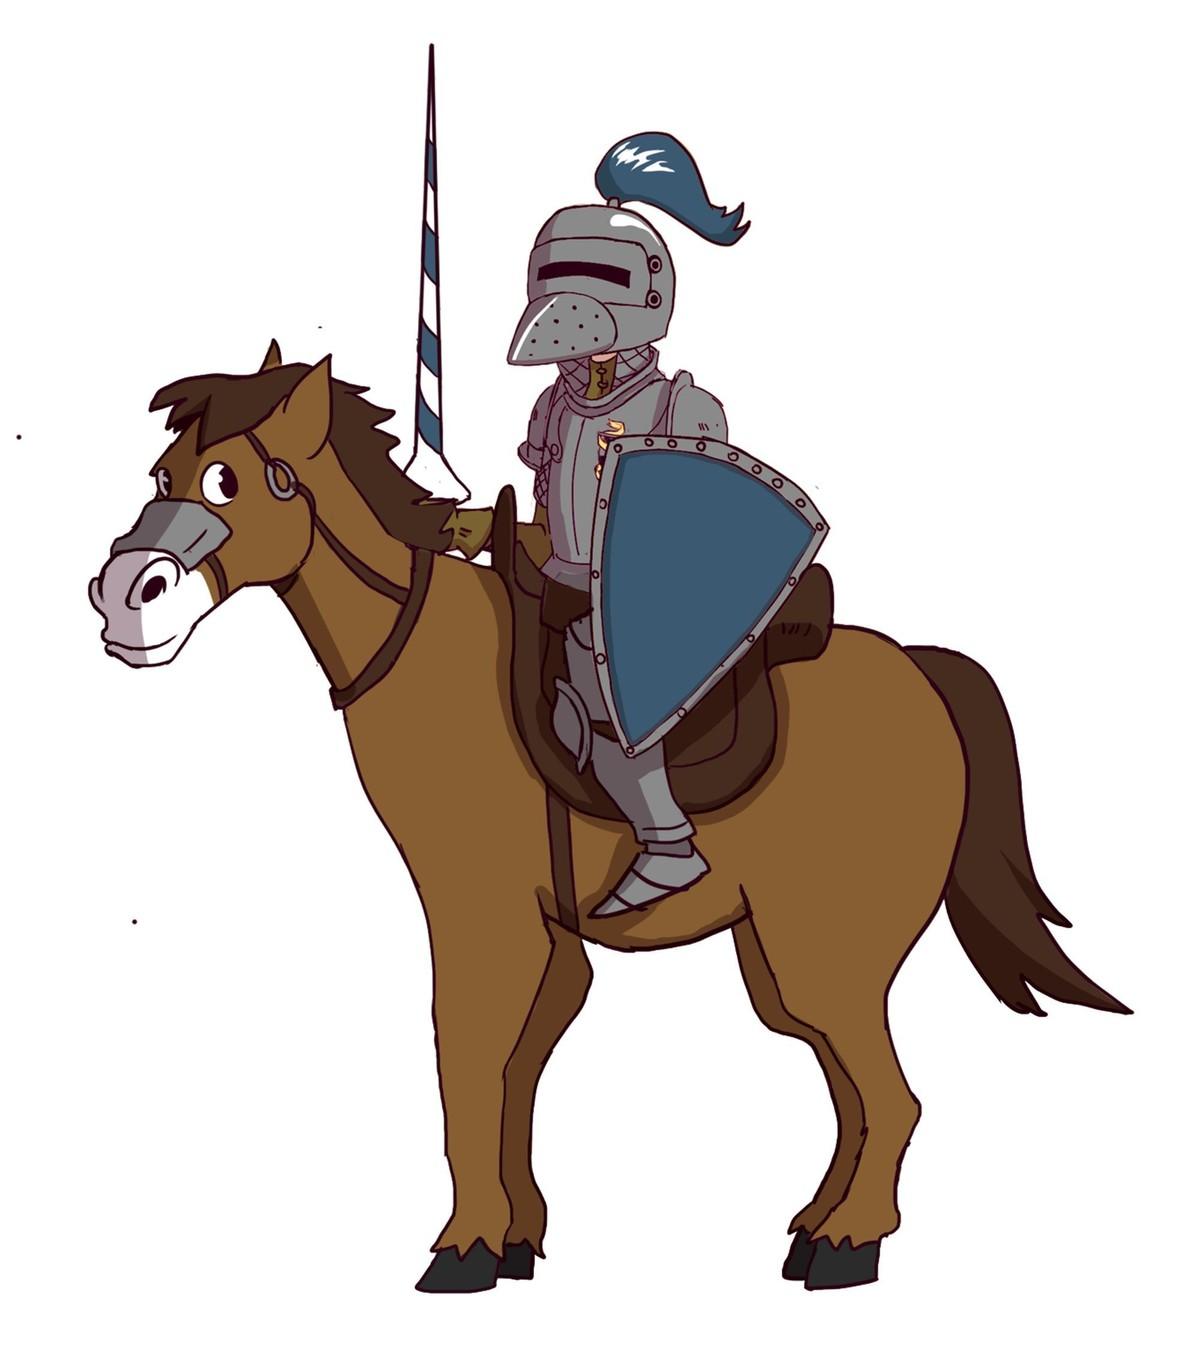 Dessin d'un chevalier sur son cheval